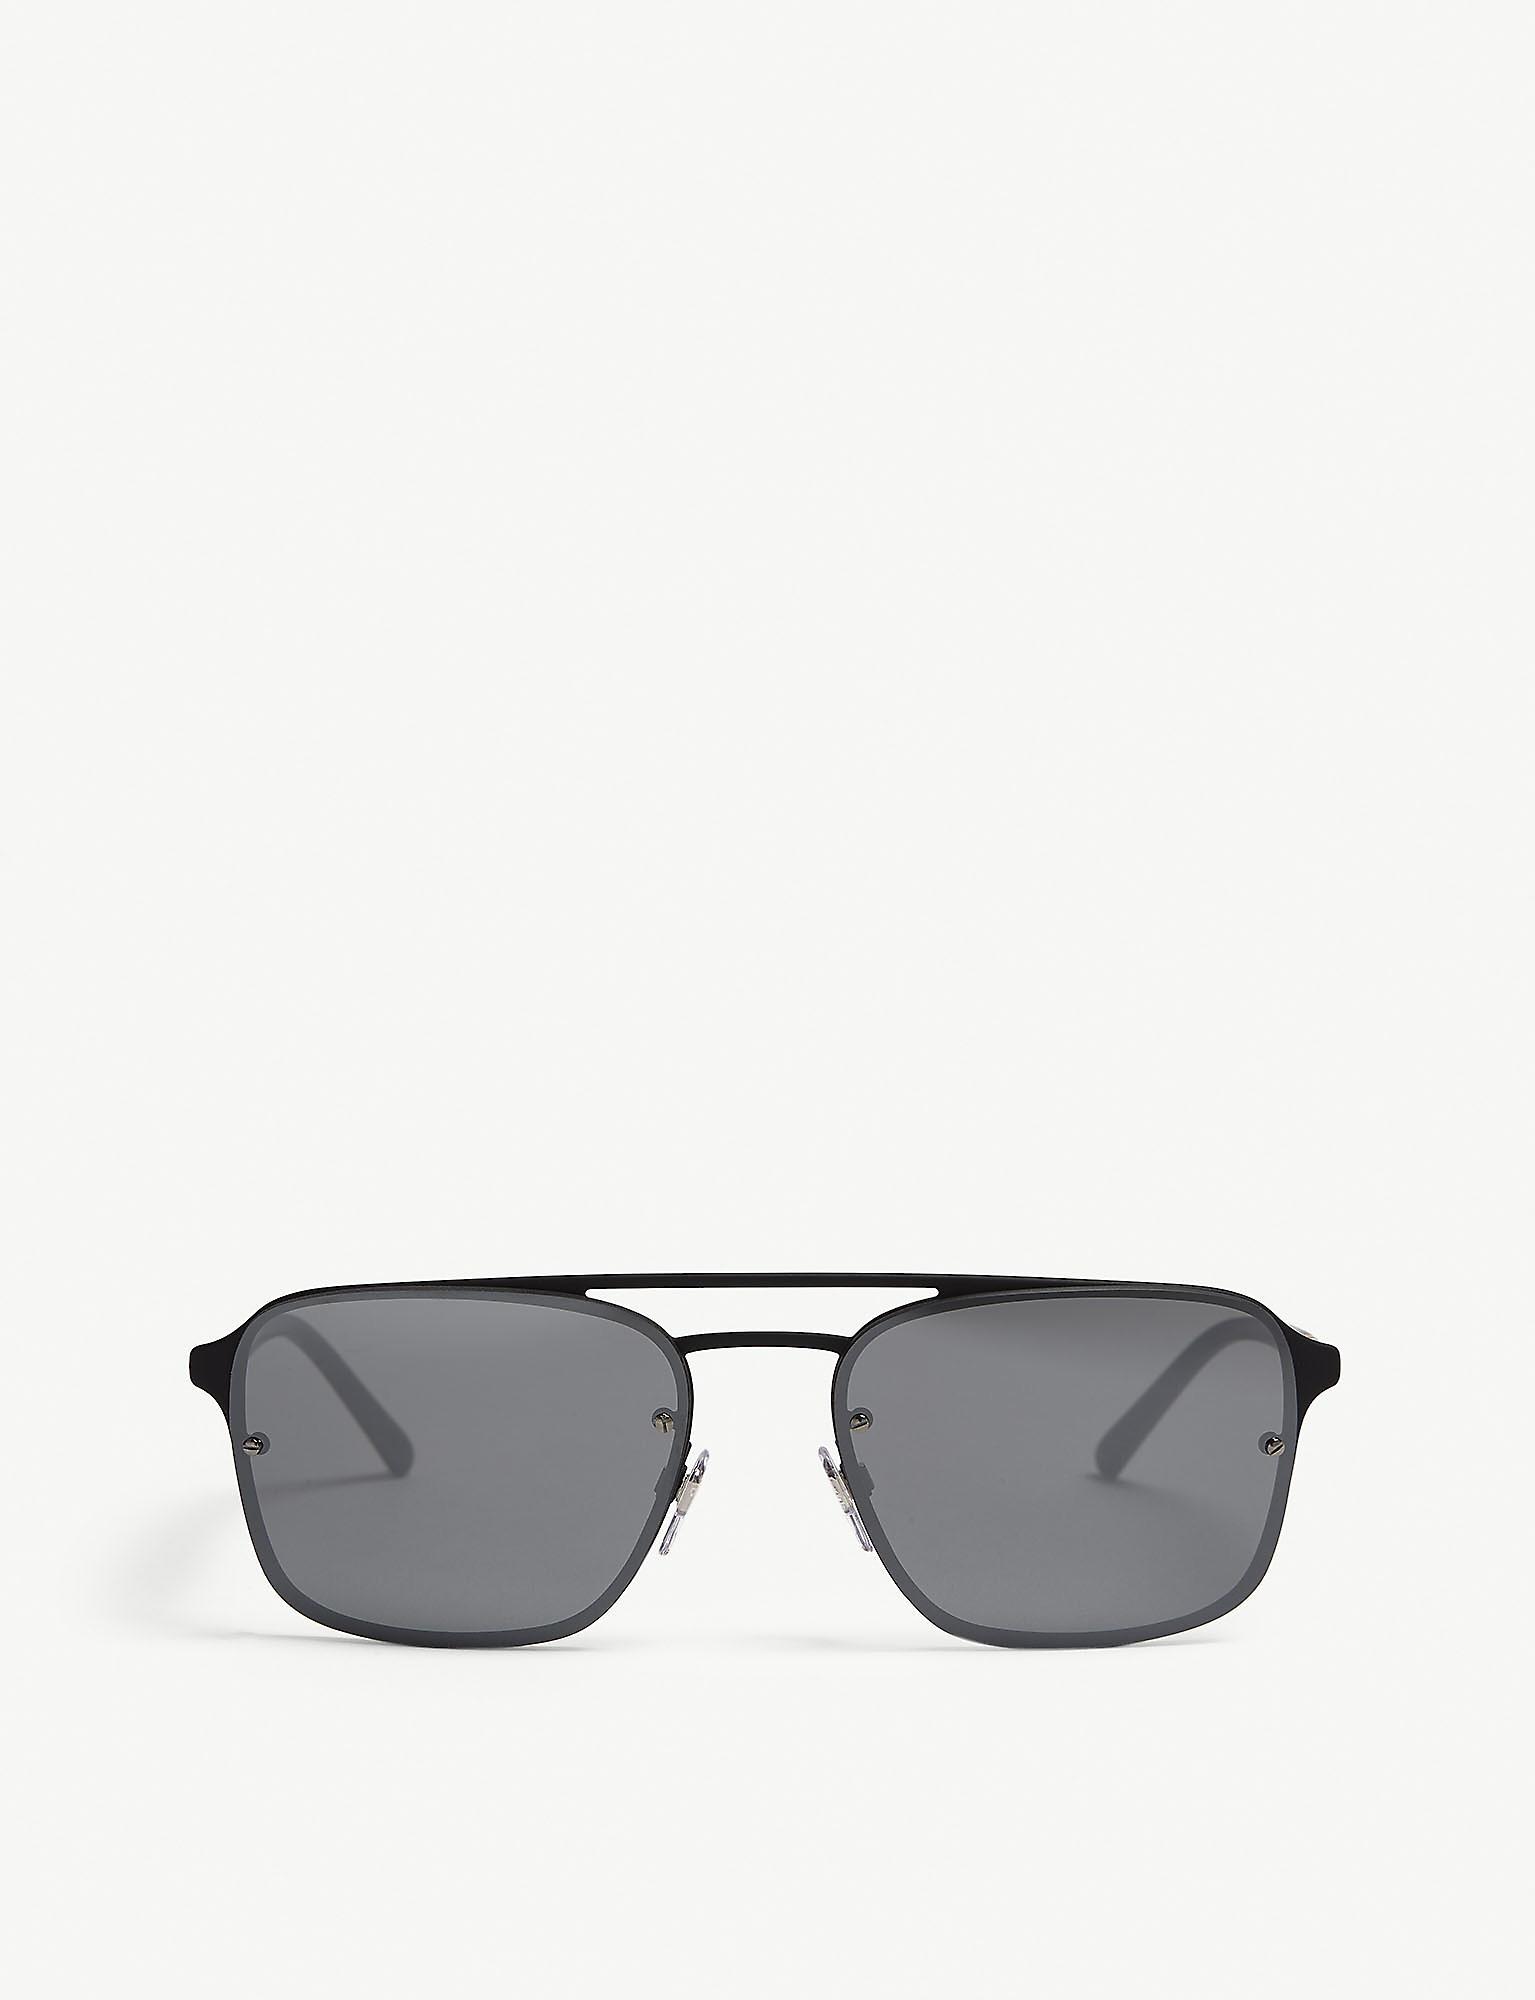 Burberry Be3095 Square-frame Sunglasses in Black for Men - Lyst